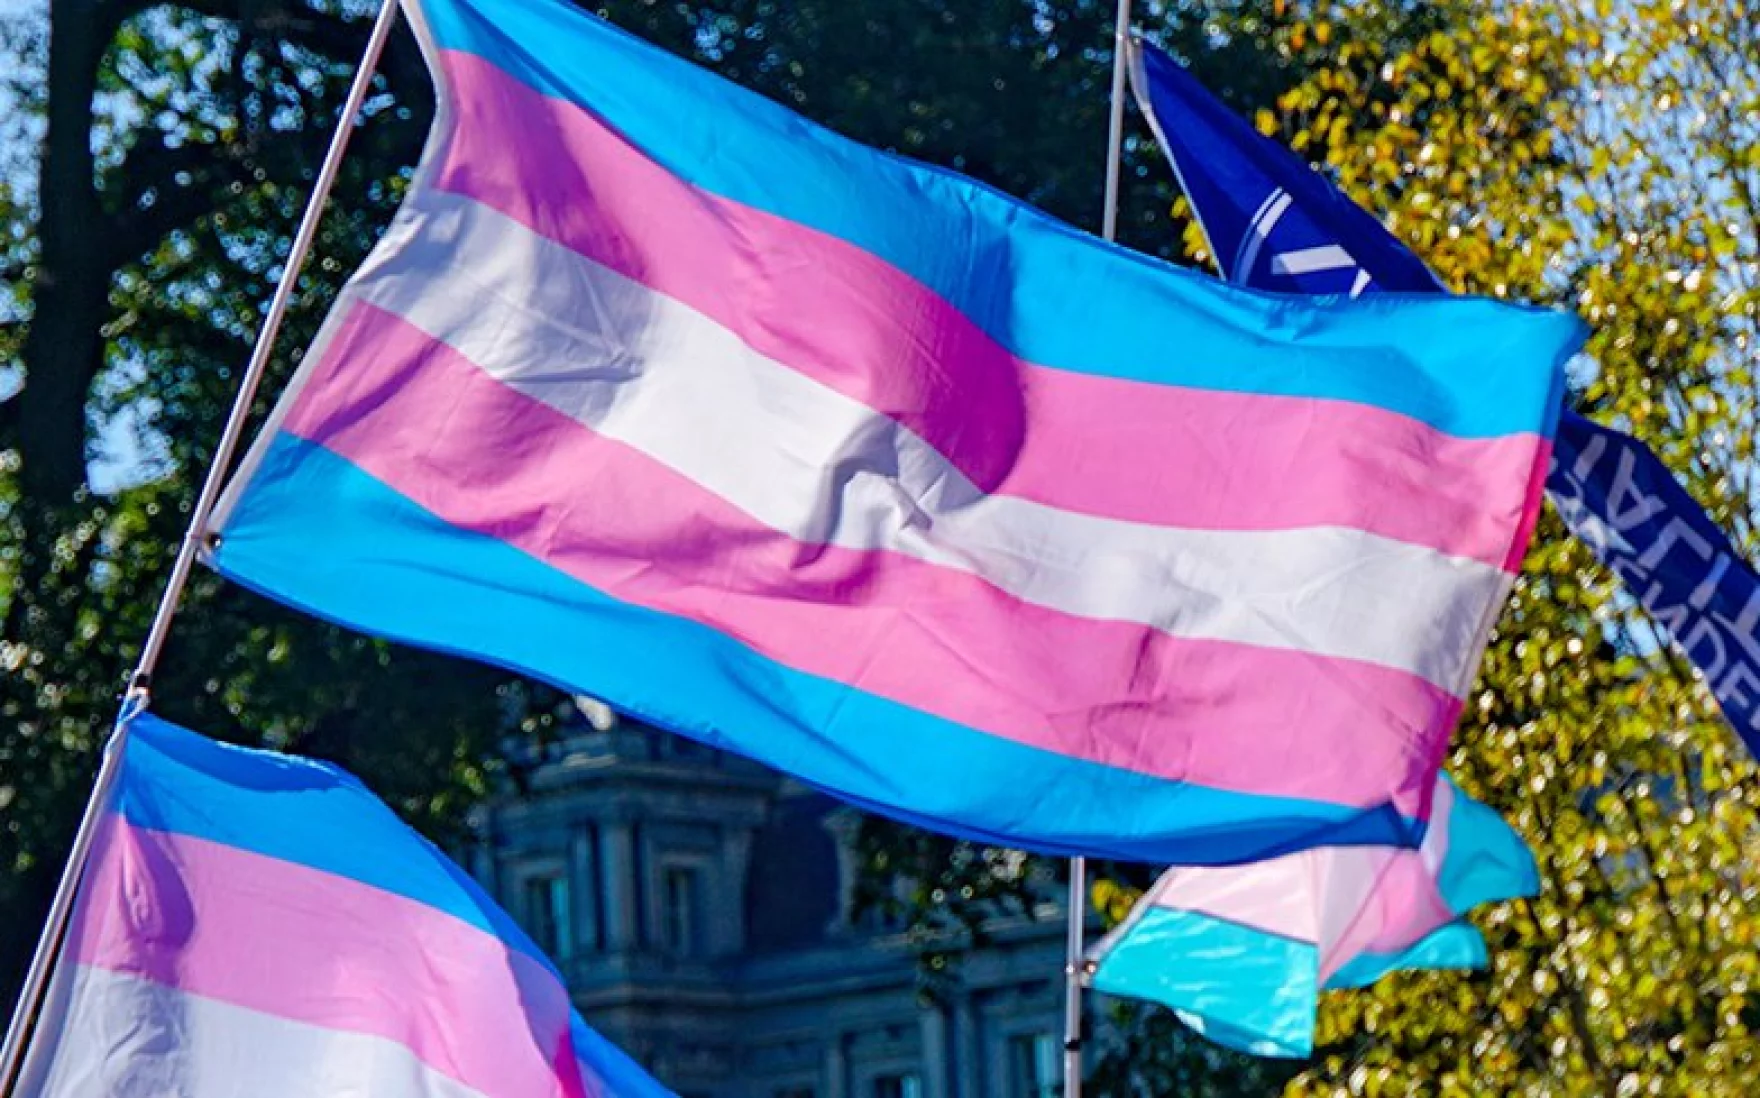 trans flags waving in the air